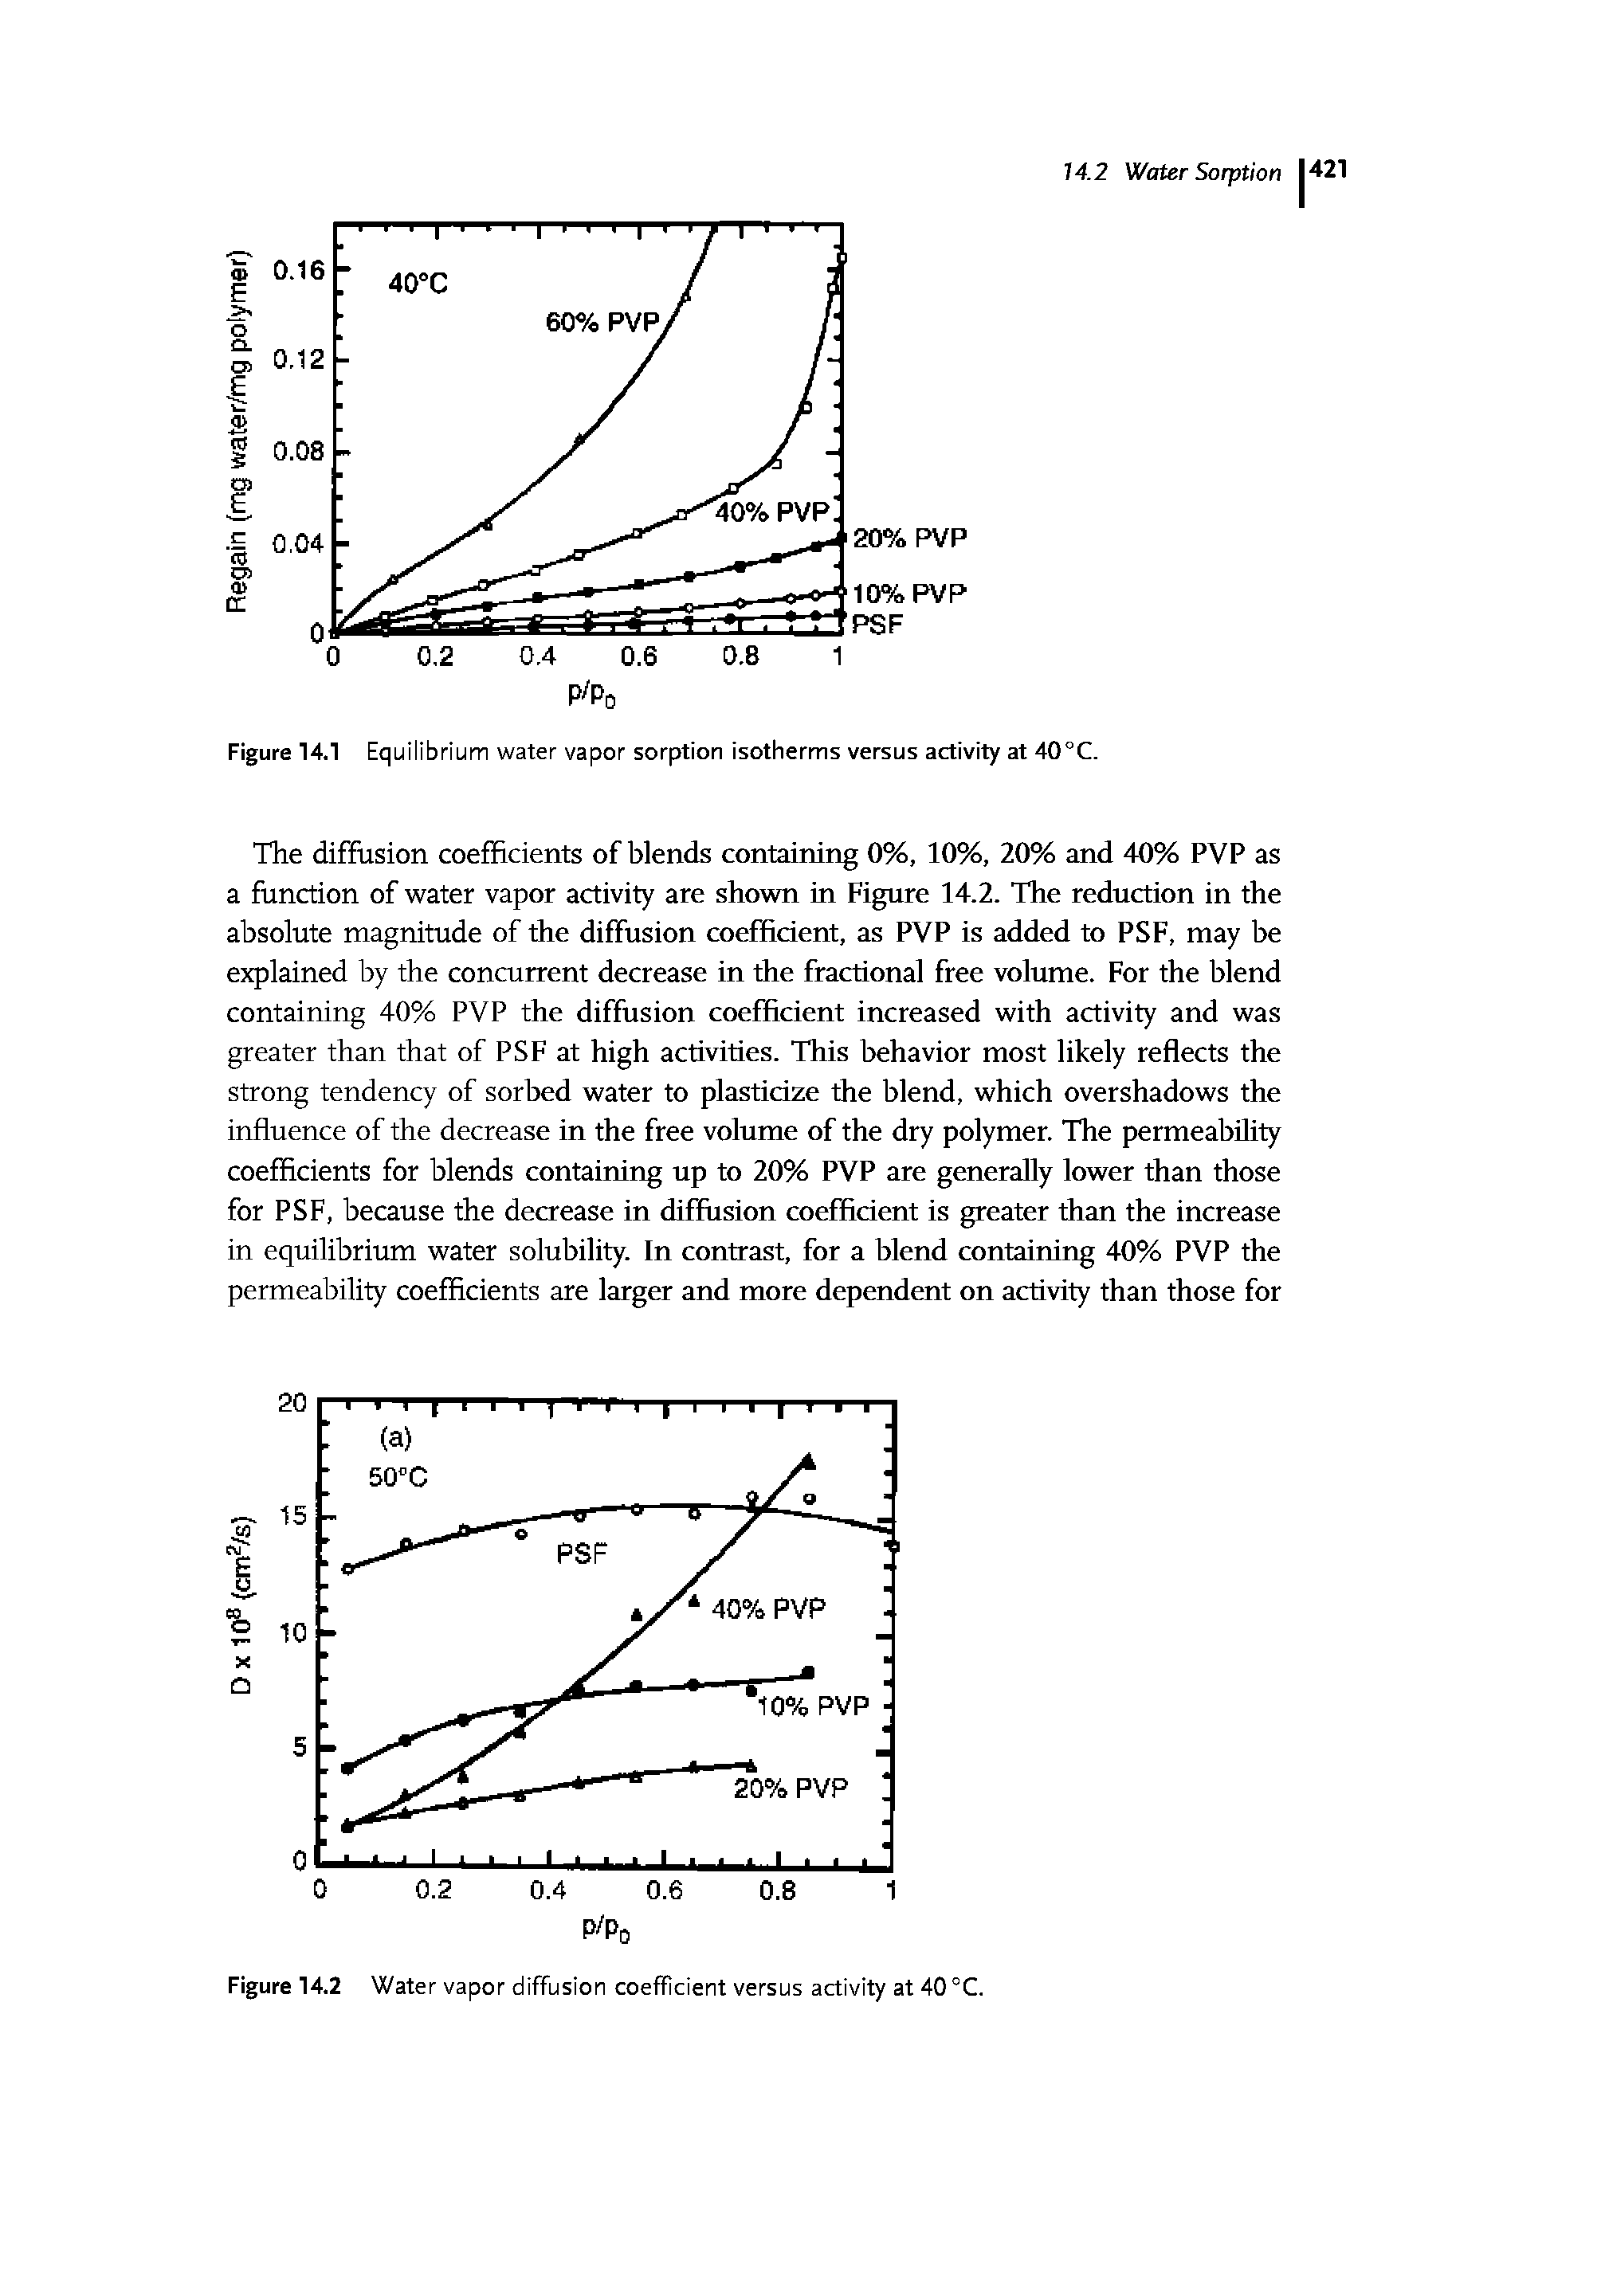 Figure 14.2 Water vapor diffusion coefficient versus activity at 40 °C.